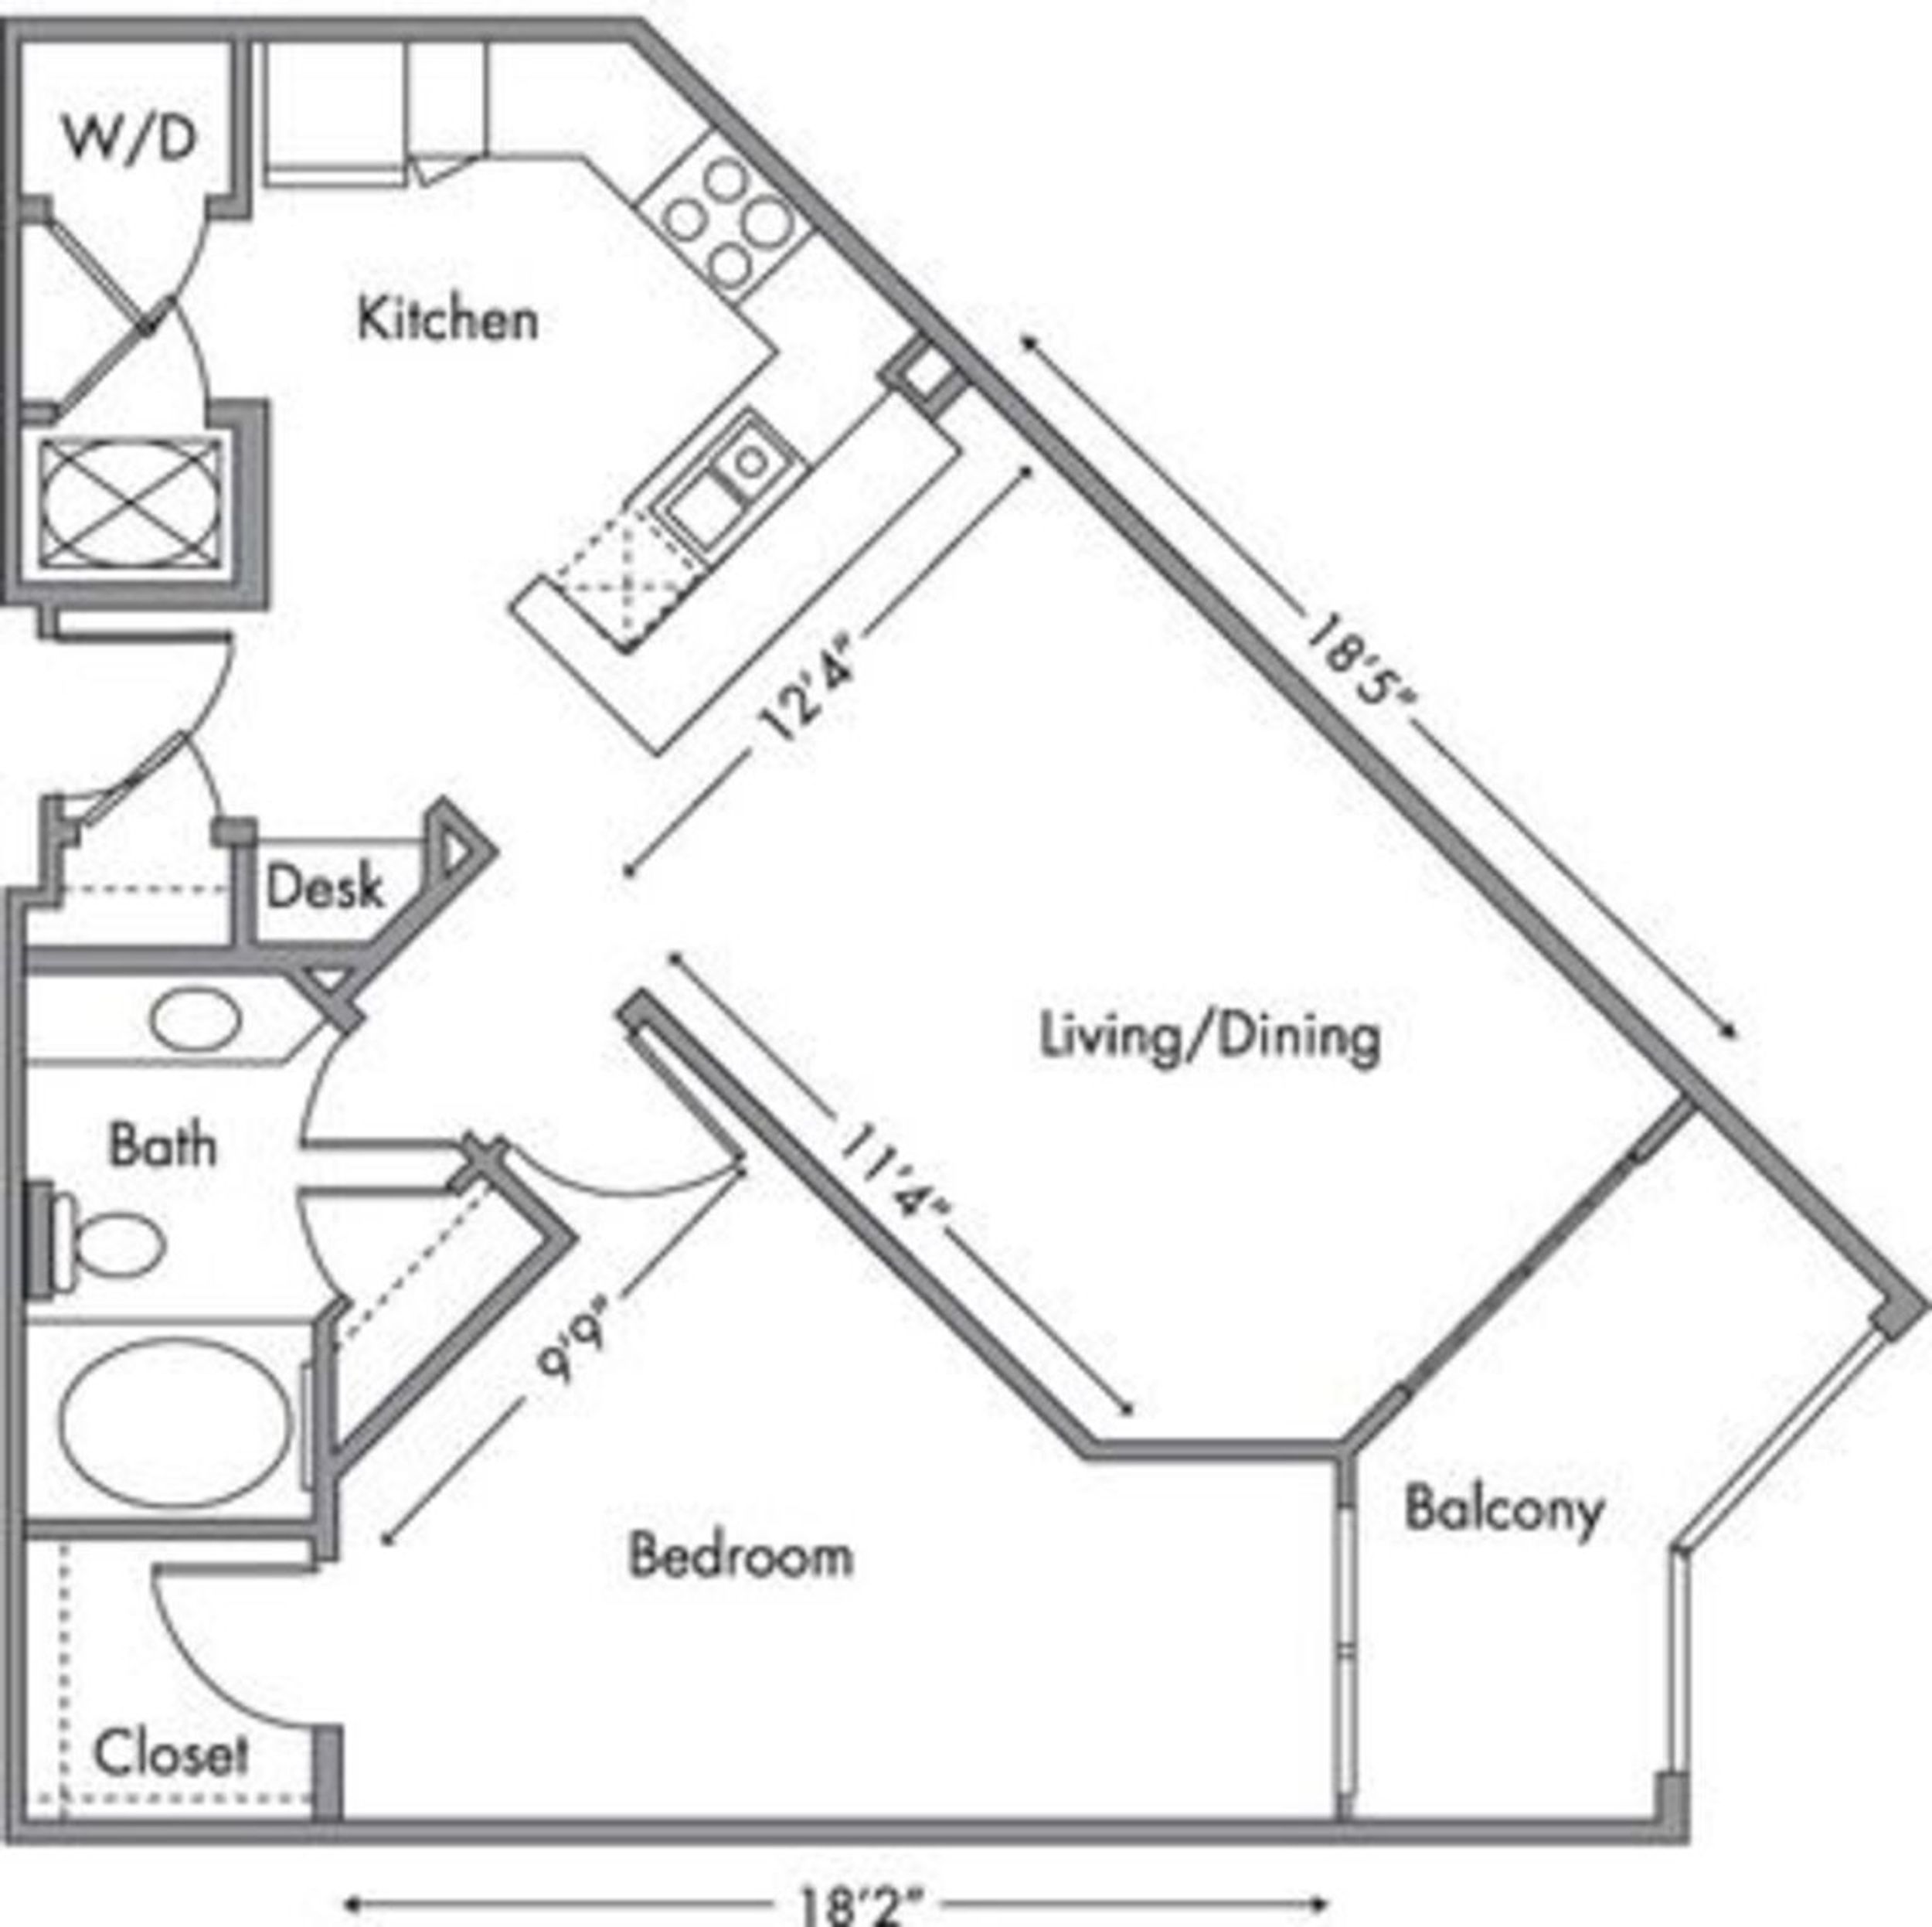 Solo Floor Plan Image